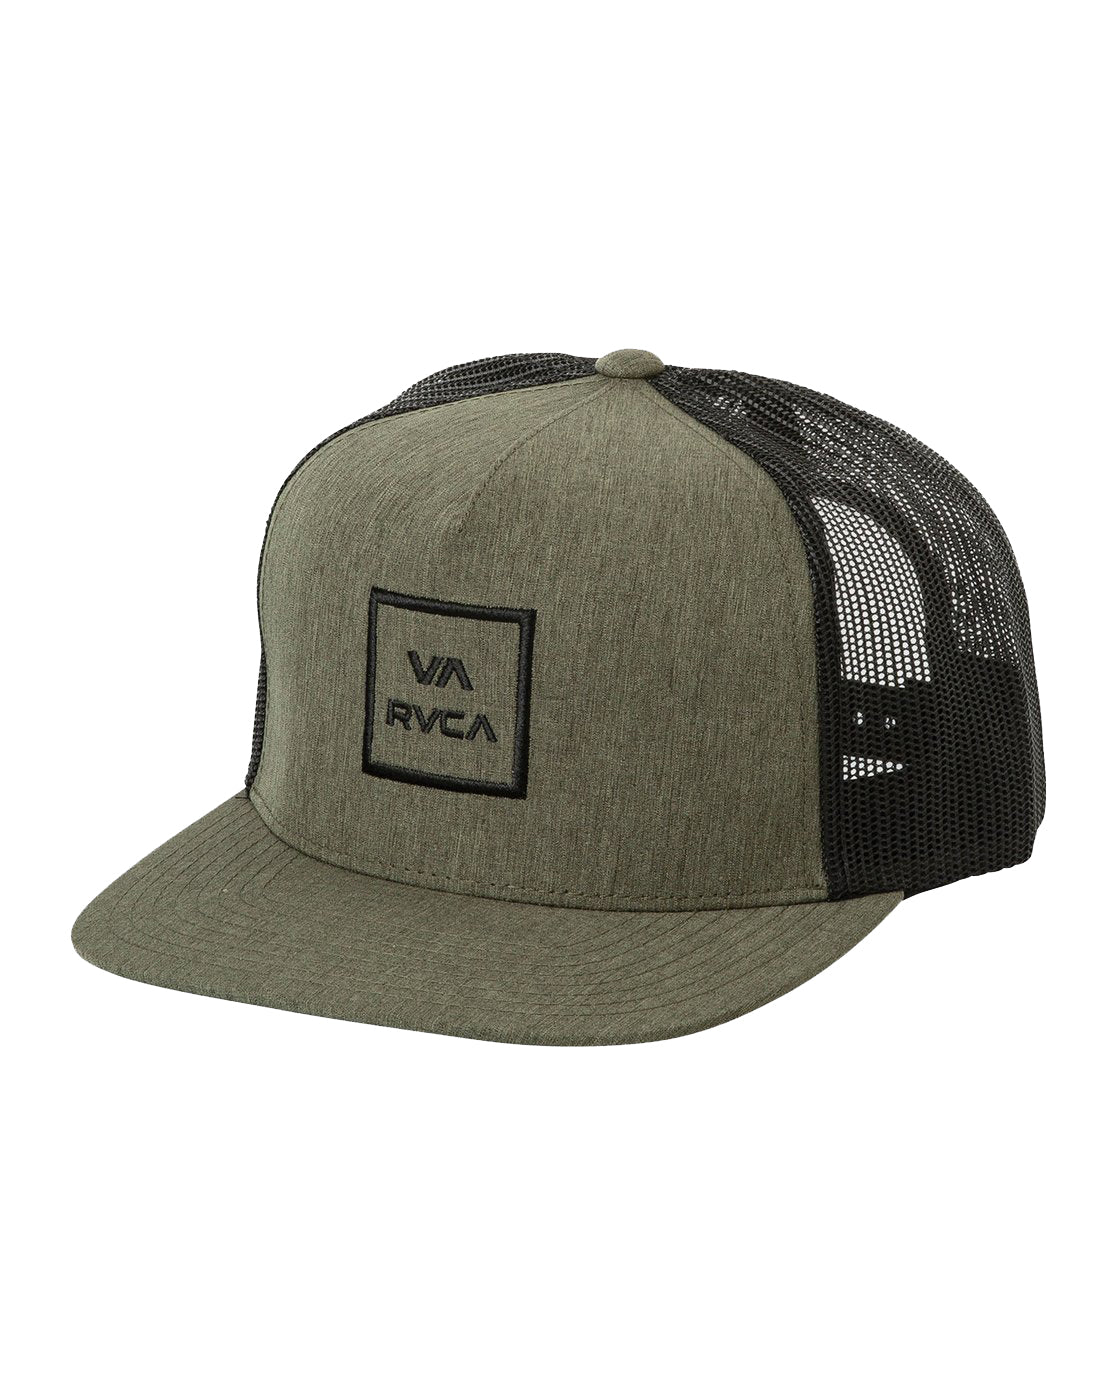 RVCA VA All The Way Trucker Hat GNH-GreenHeather OS